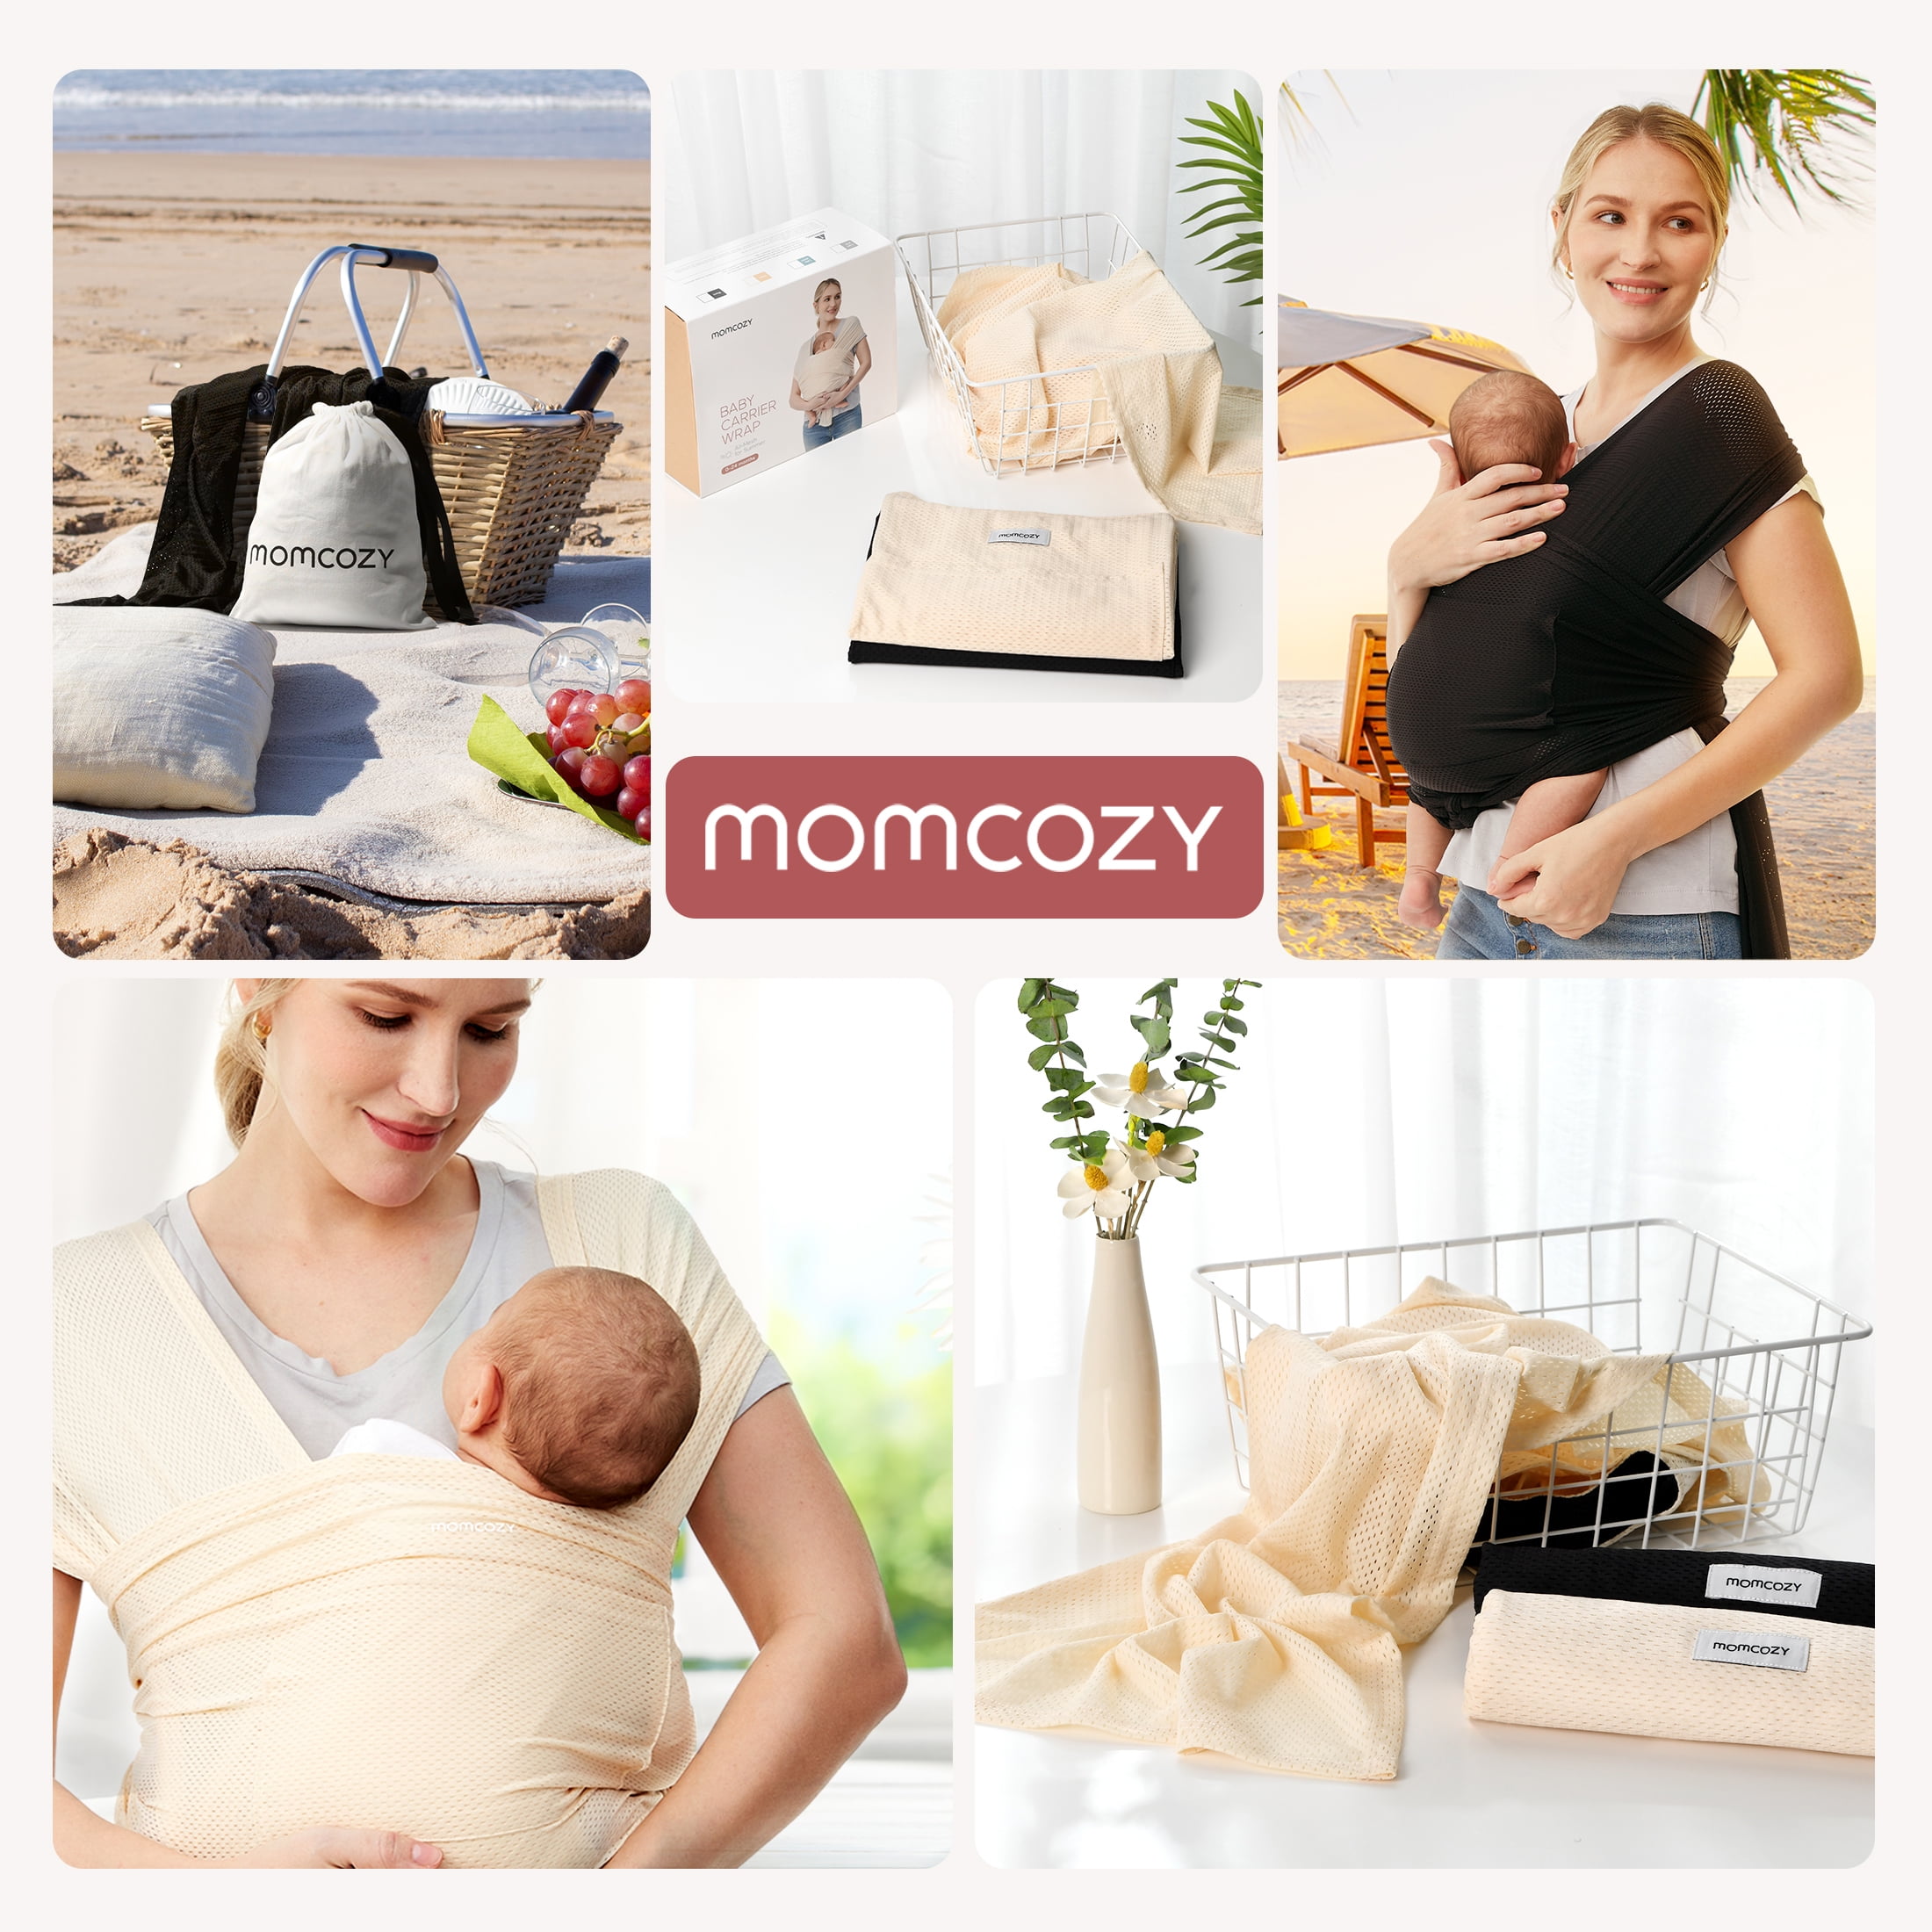 Momcozy introduces baby-centered brand, BabyCozy, through